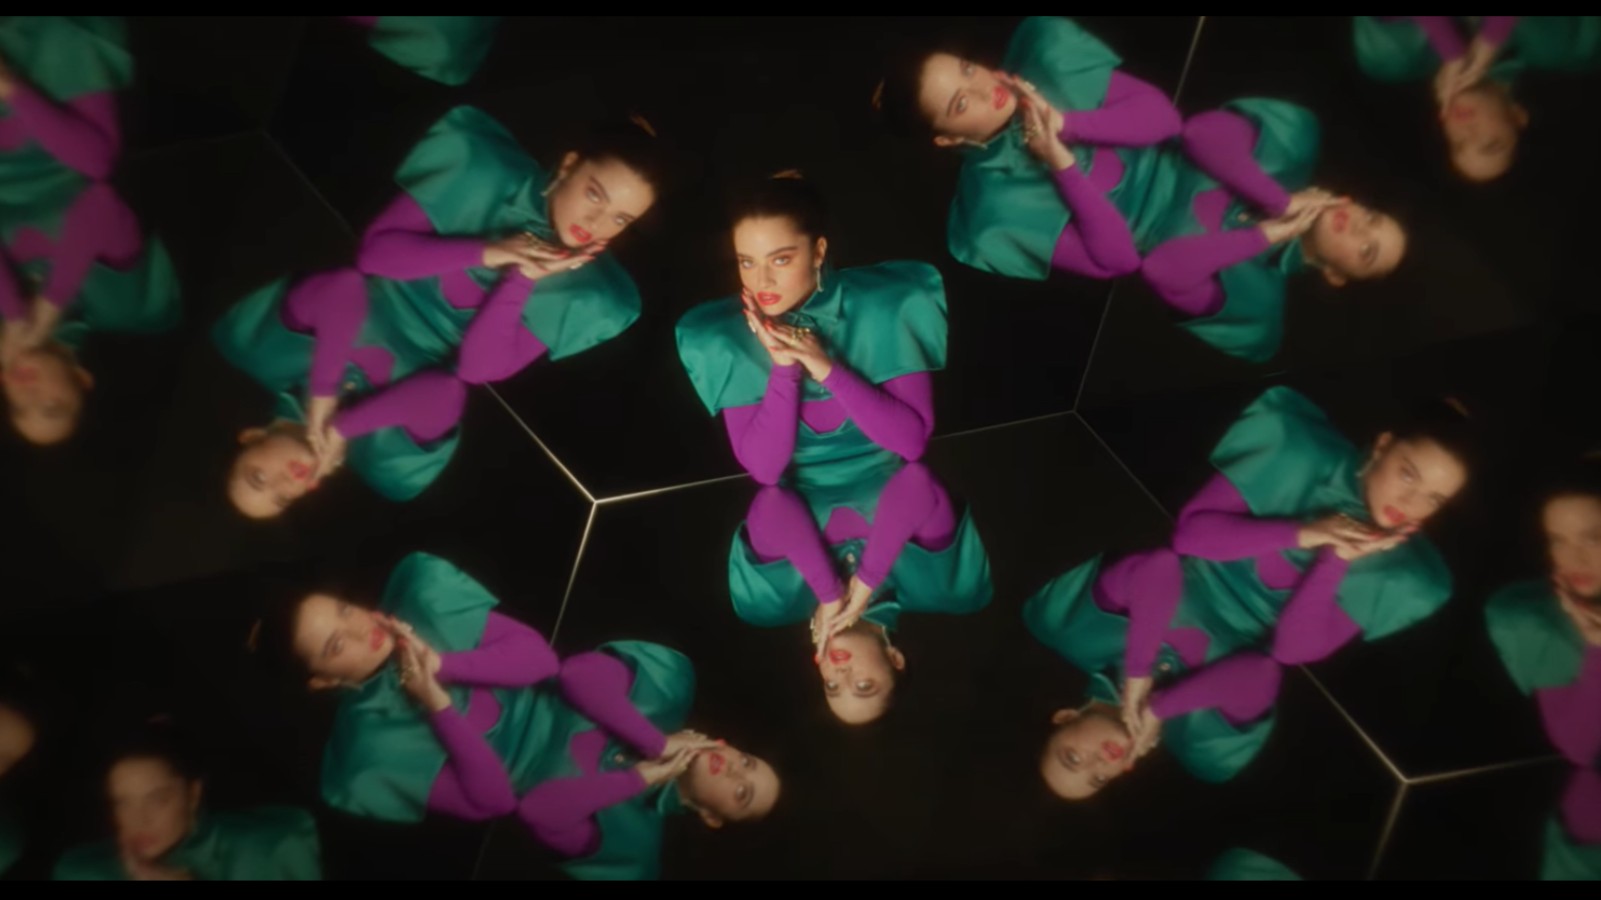 Screenshot from Noa Kirel’s “Bling Bling” music video.